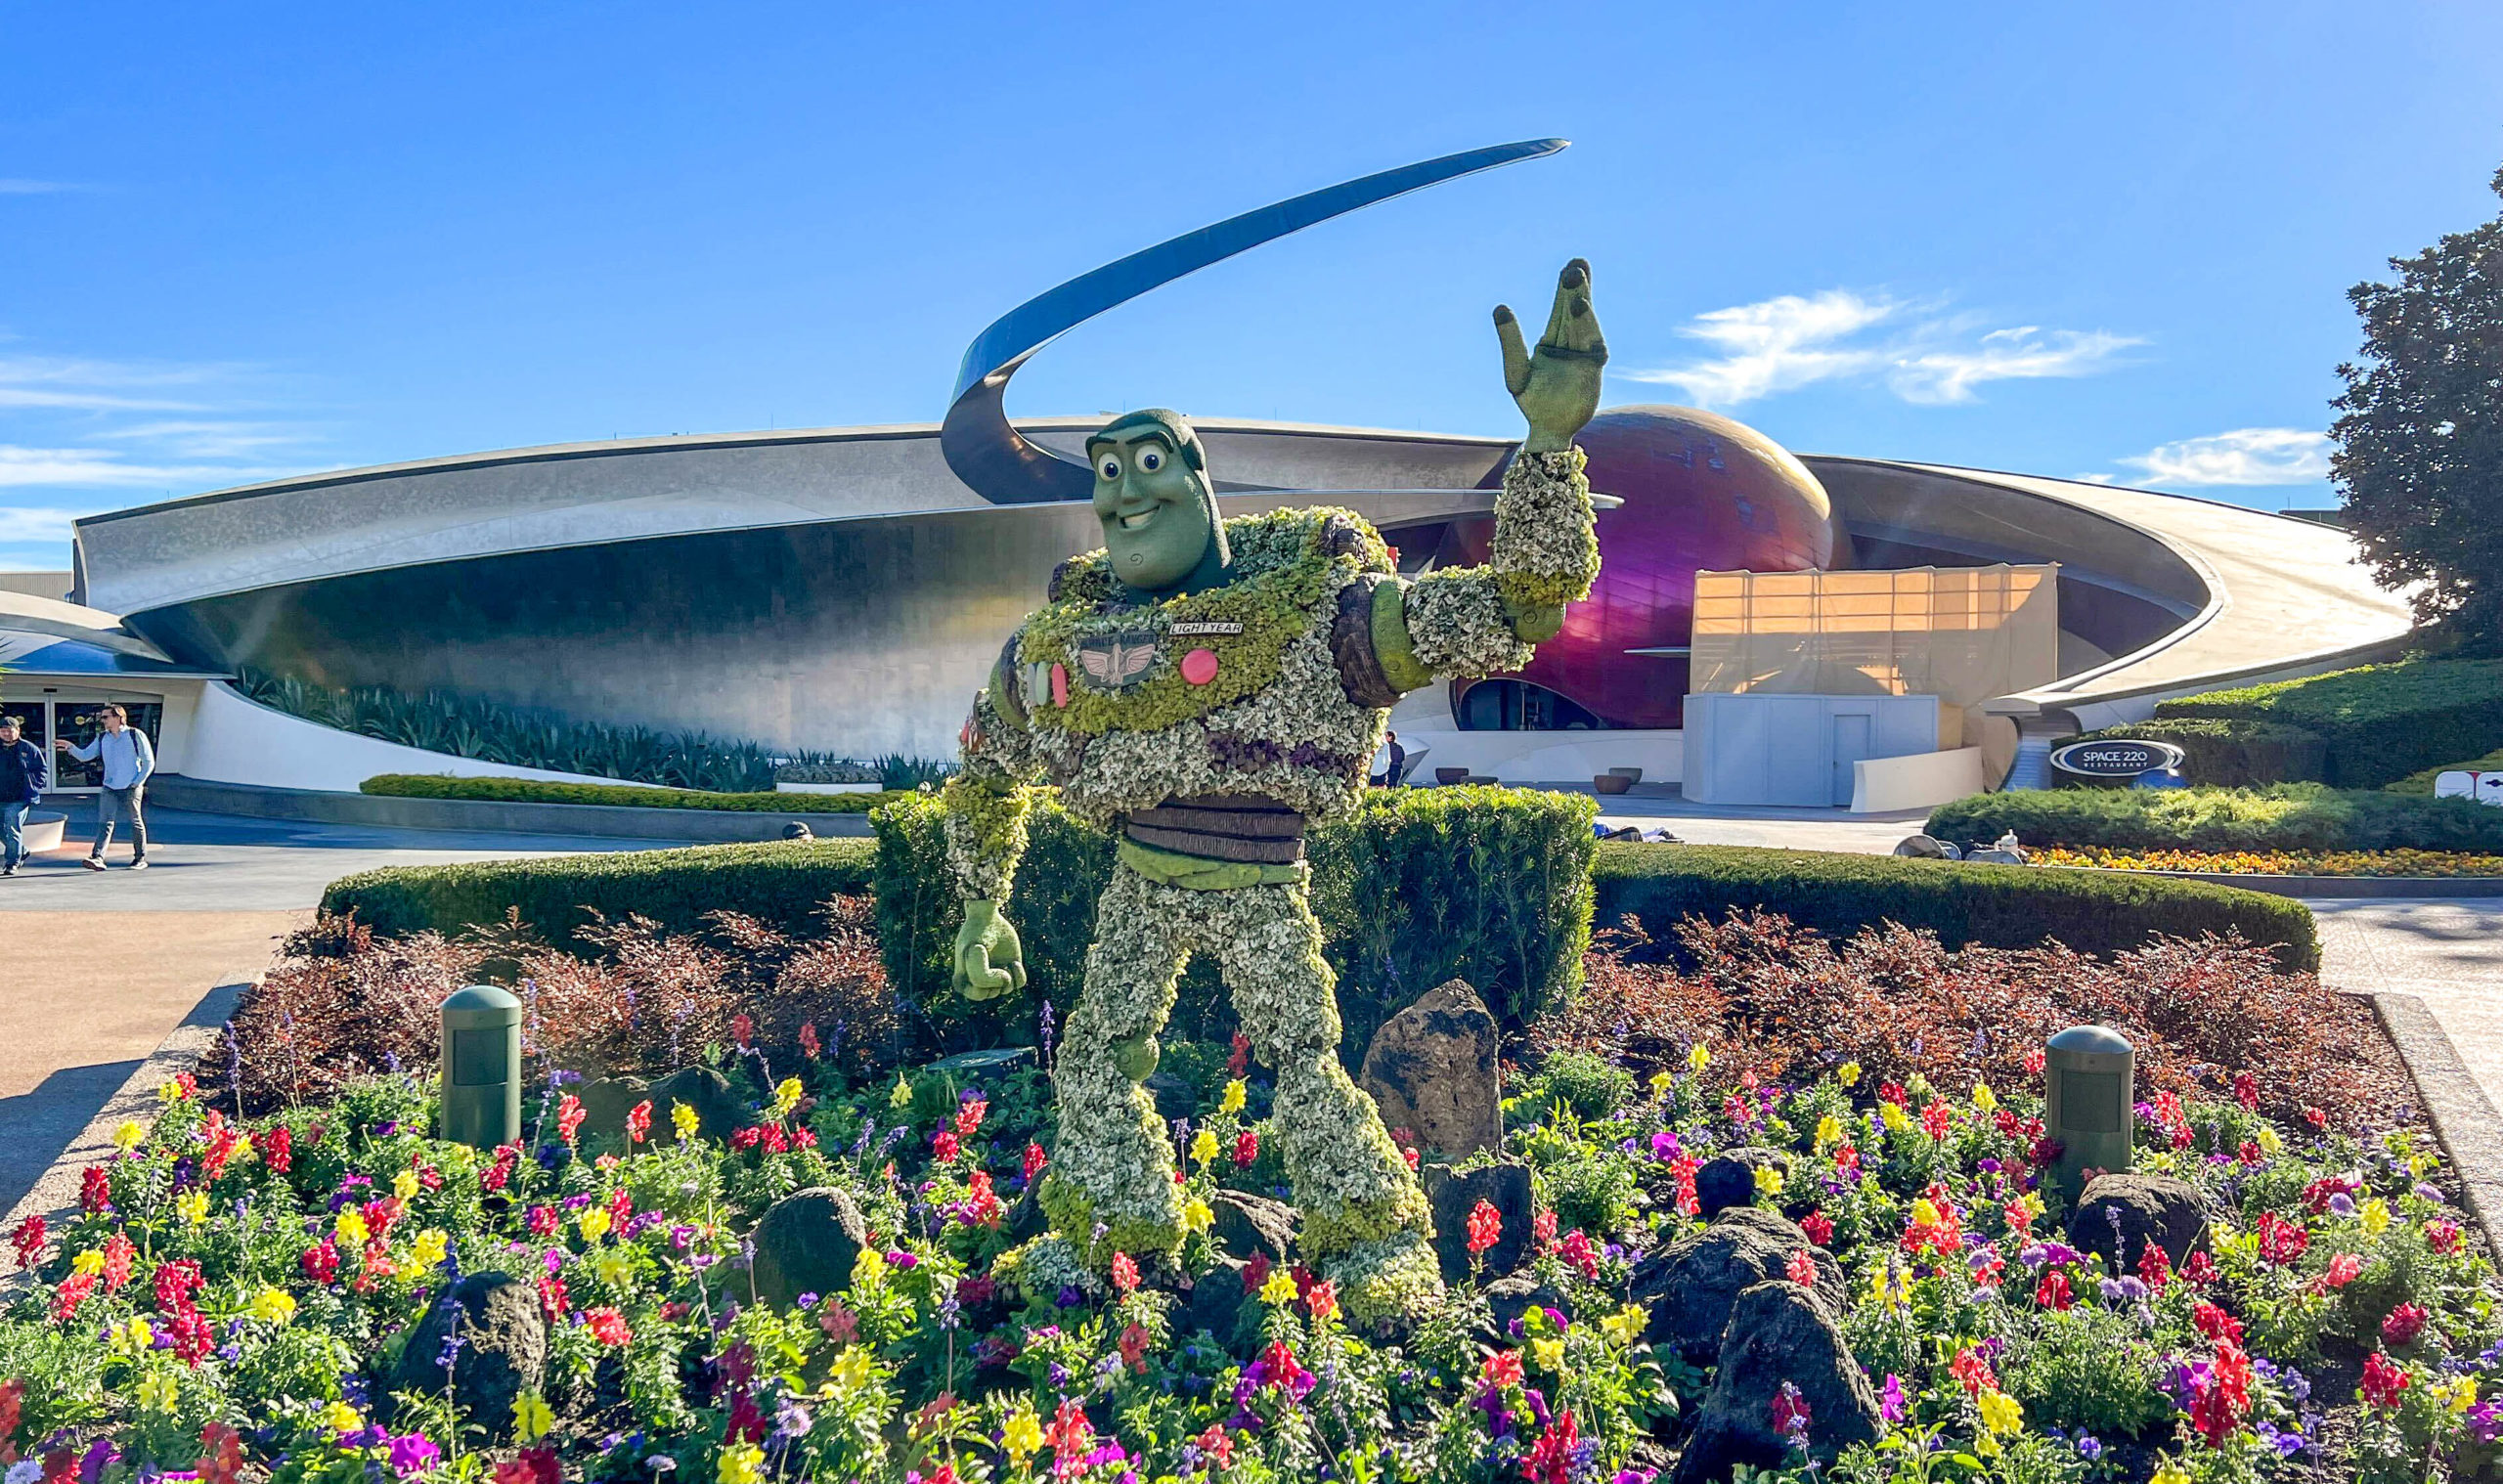 Buzz Lightyear topiary